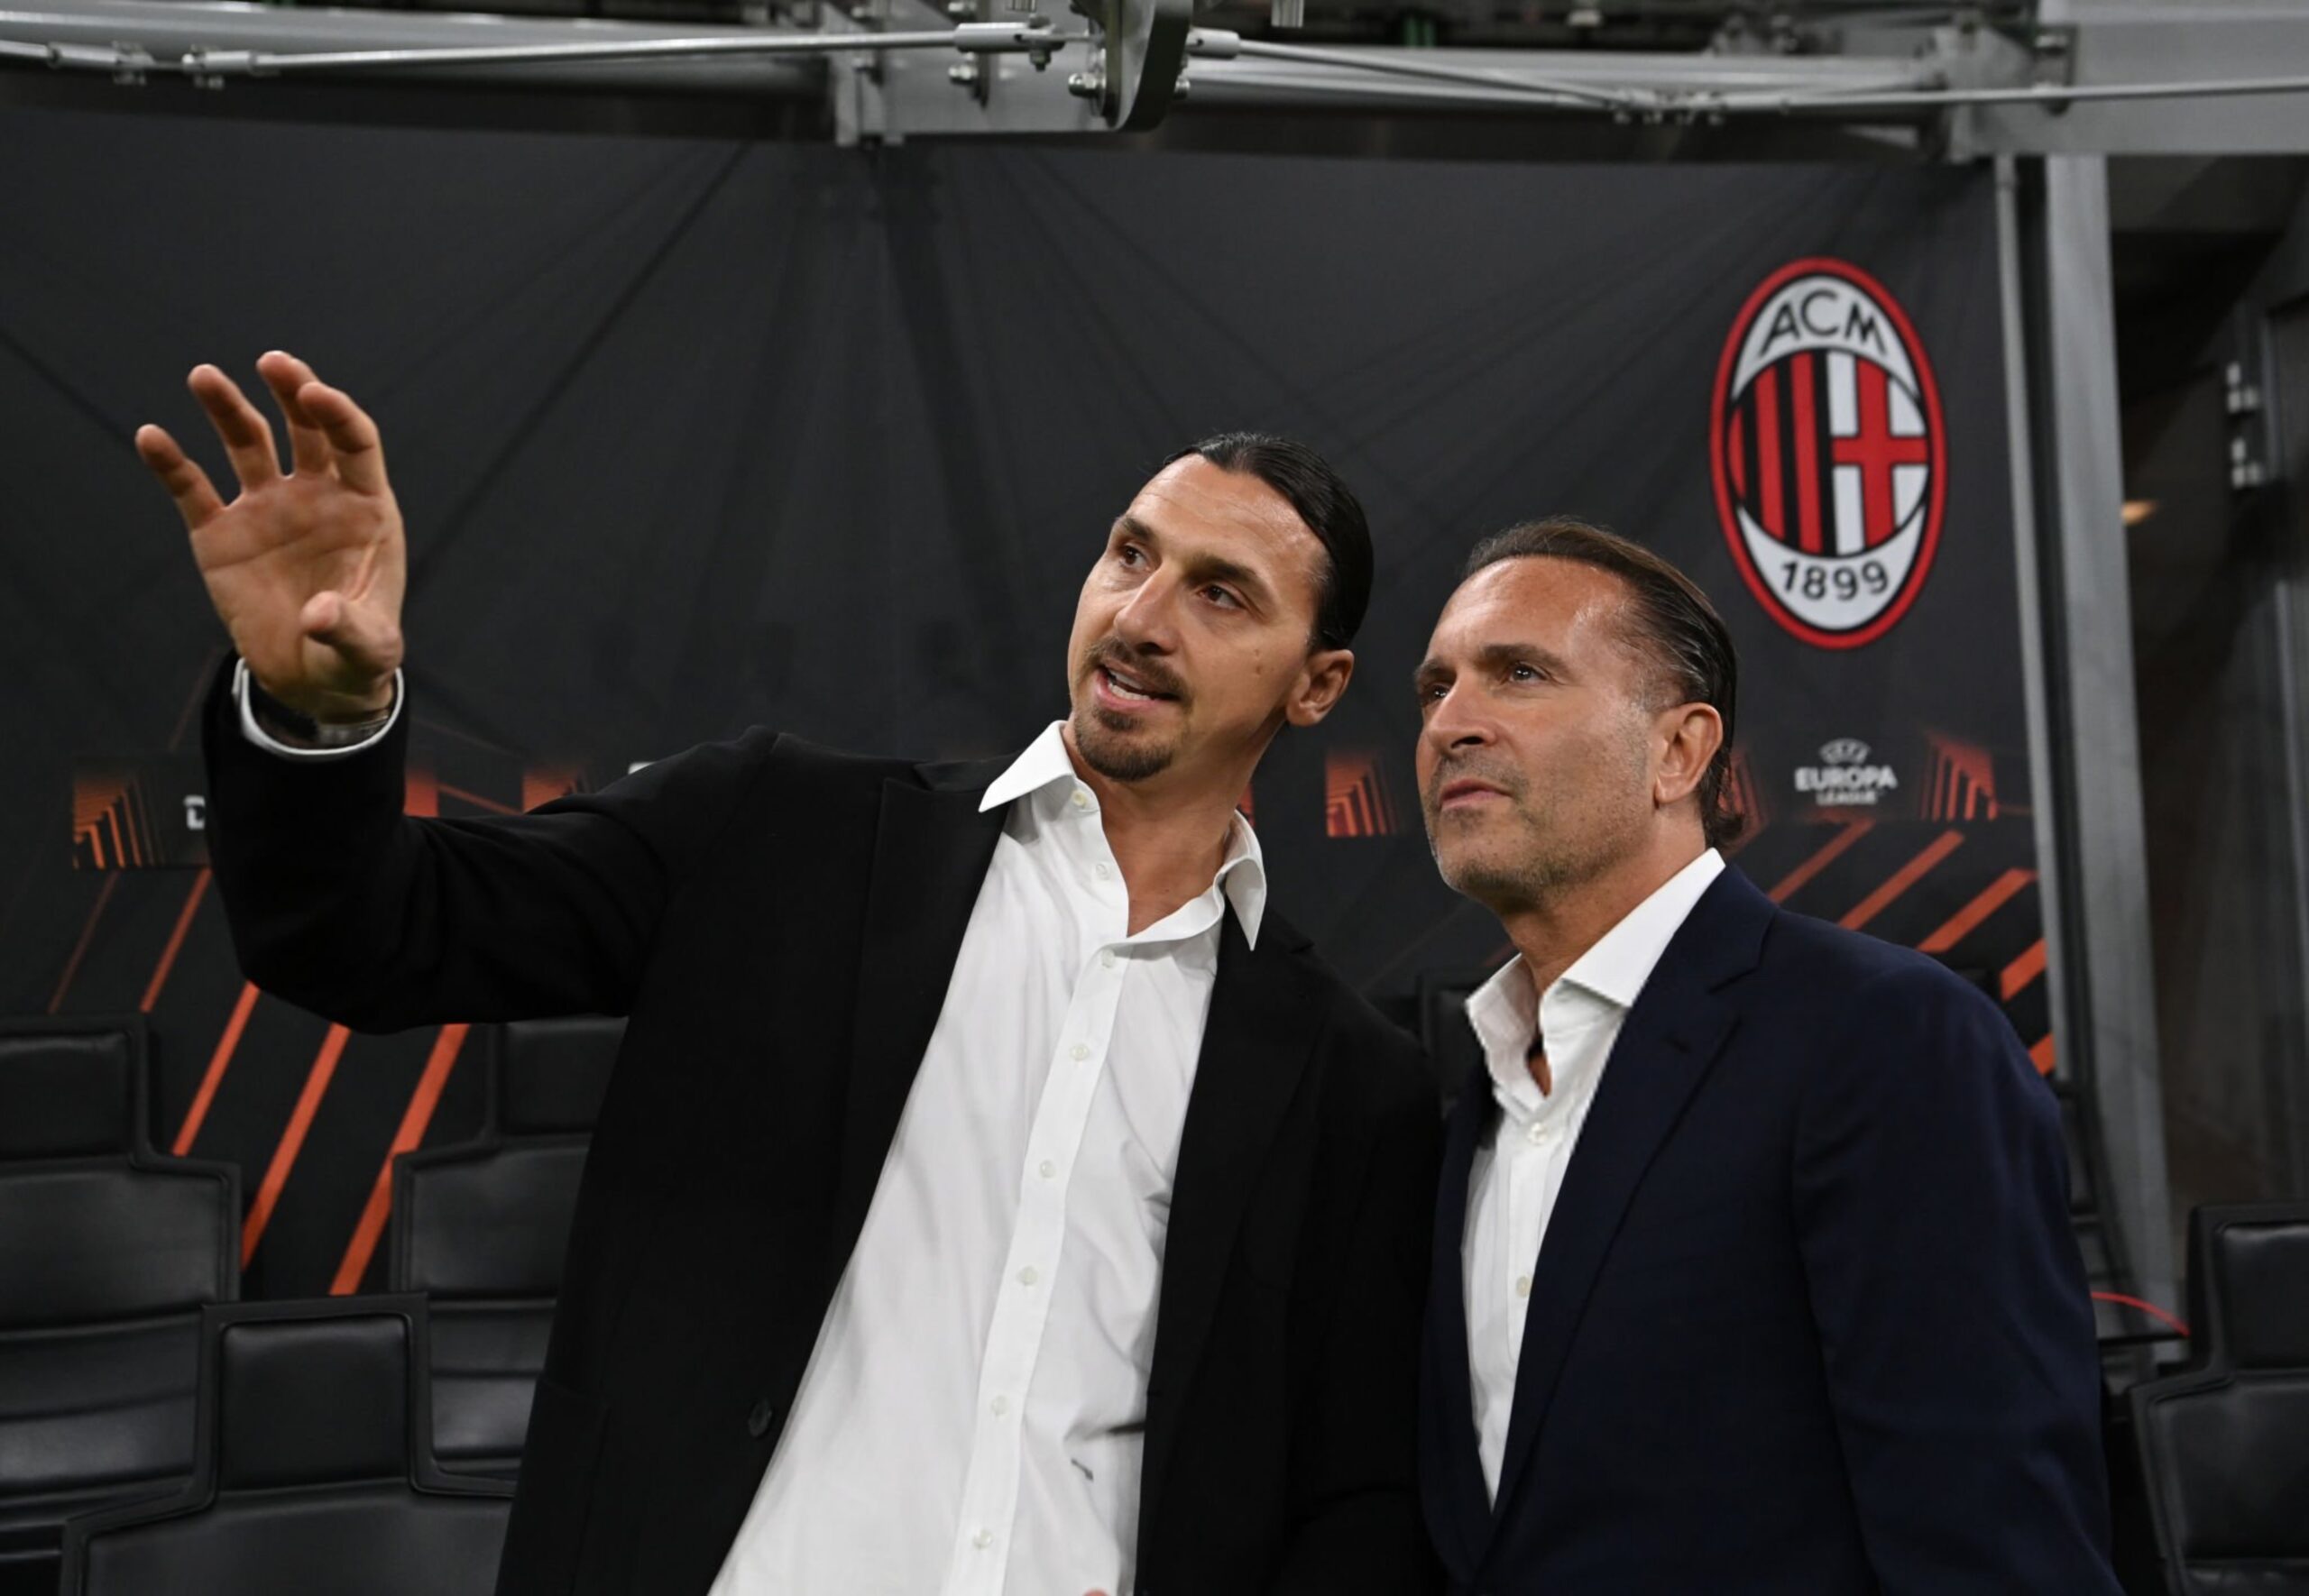 Zlatan Ibrahimovic with Gerry Cardinale (AC Milan via Getty Images)